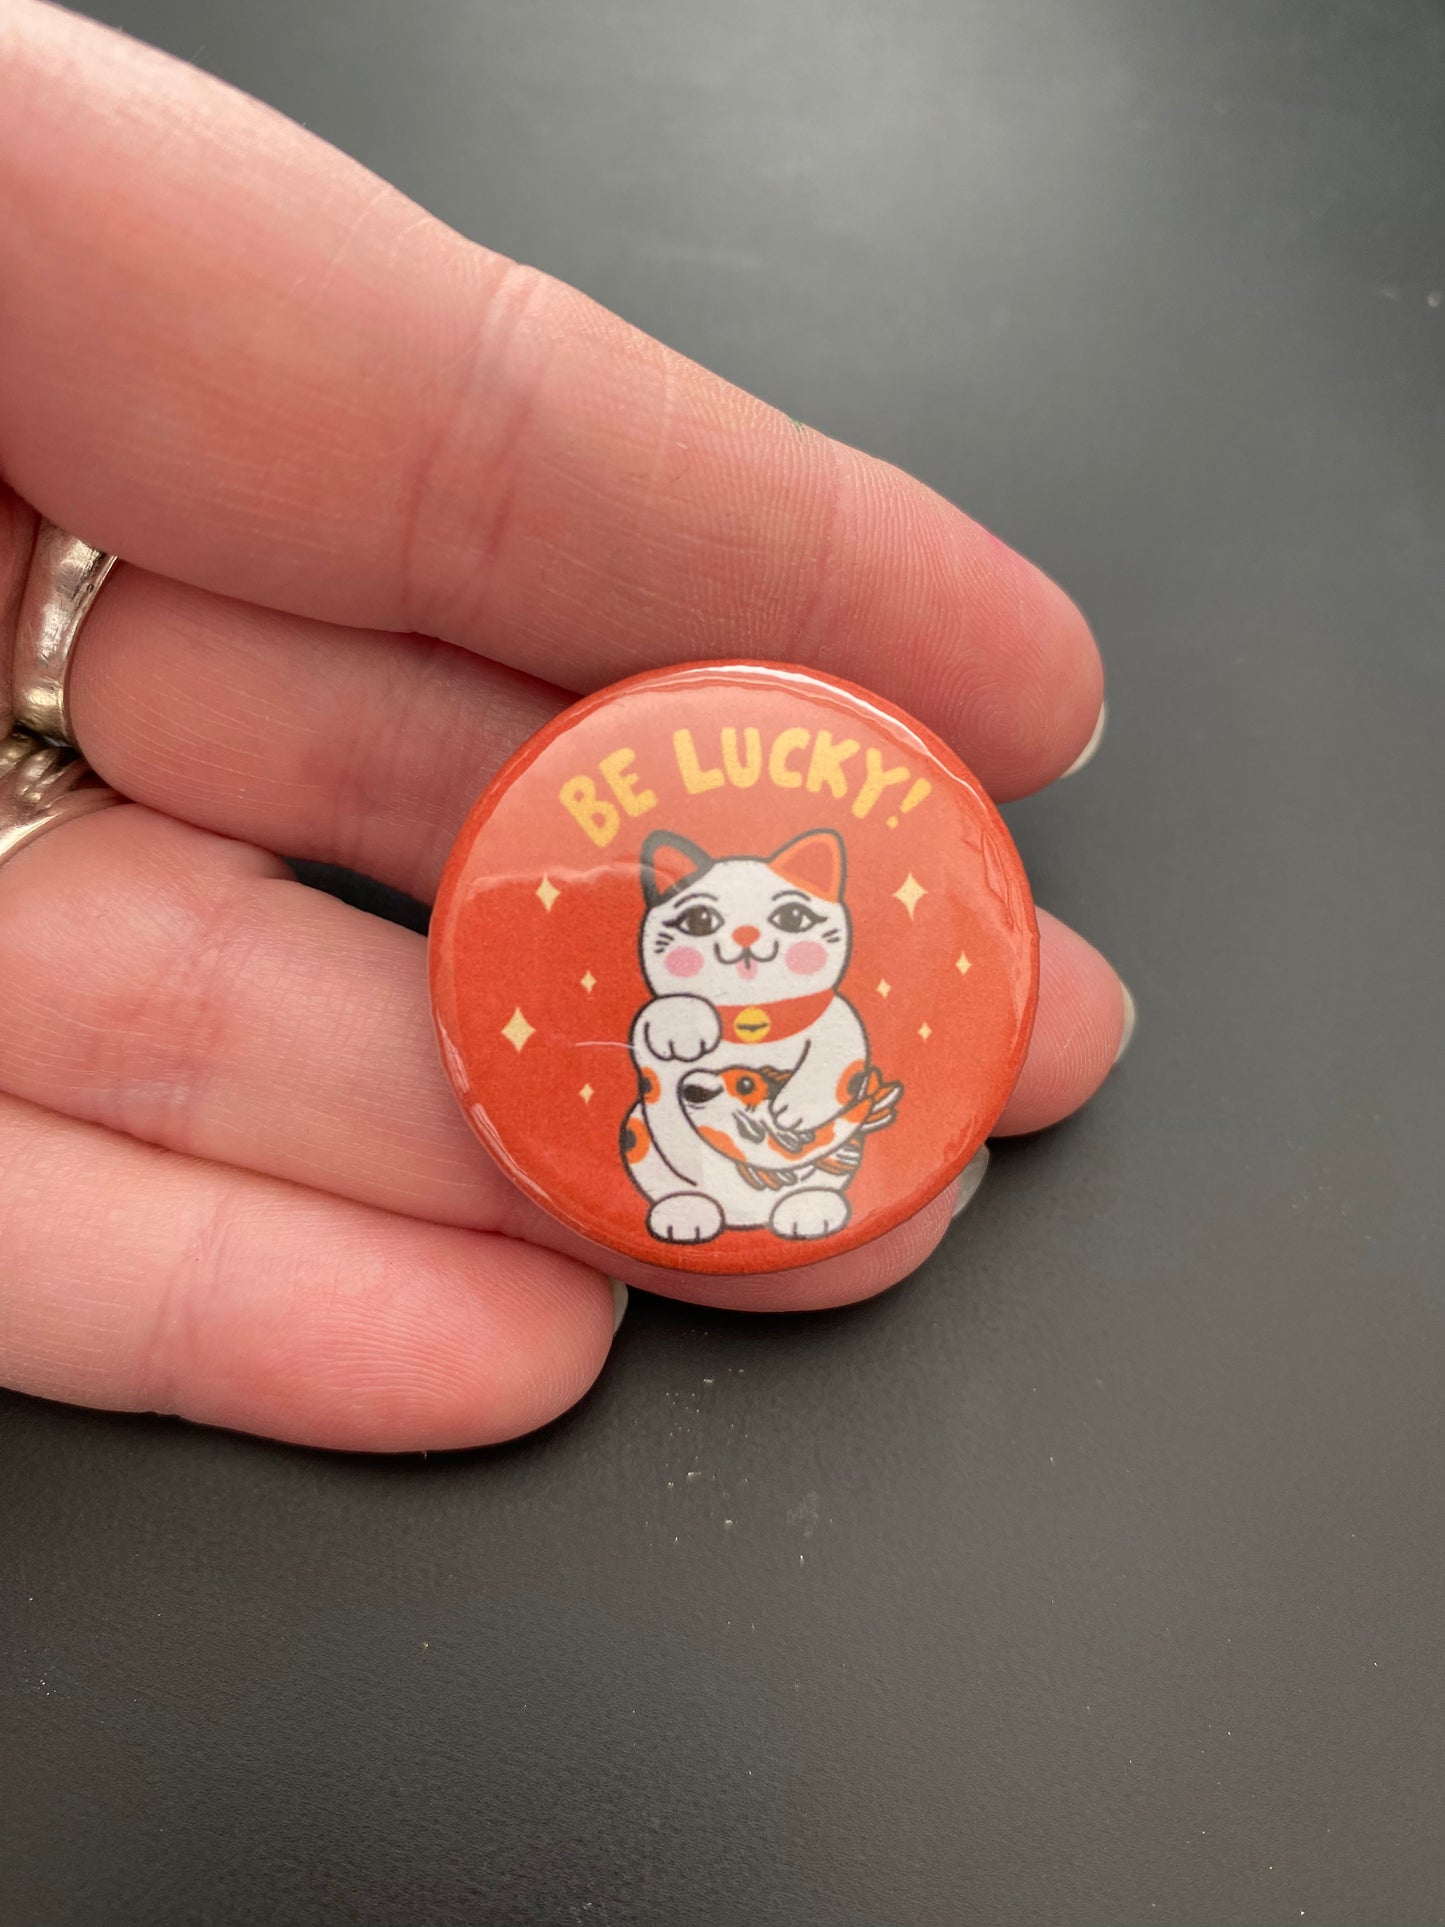 Be Lucky button badge